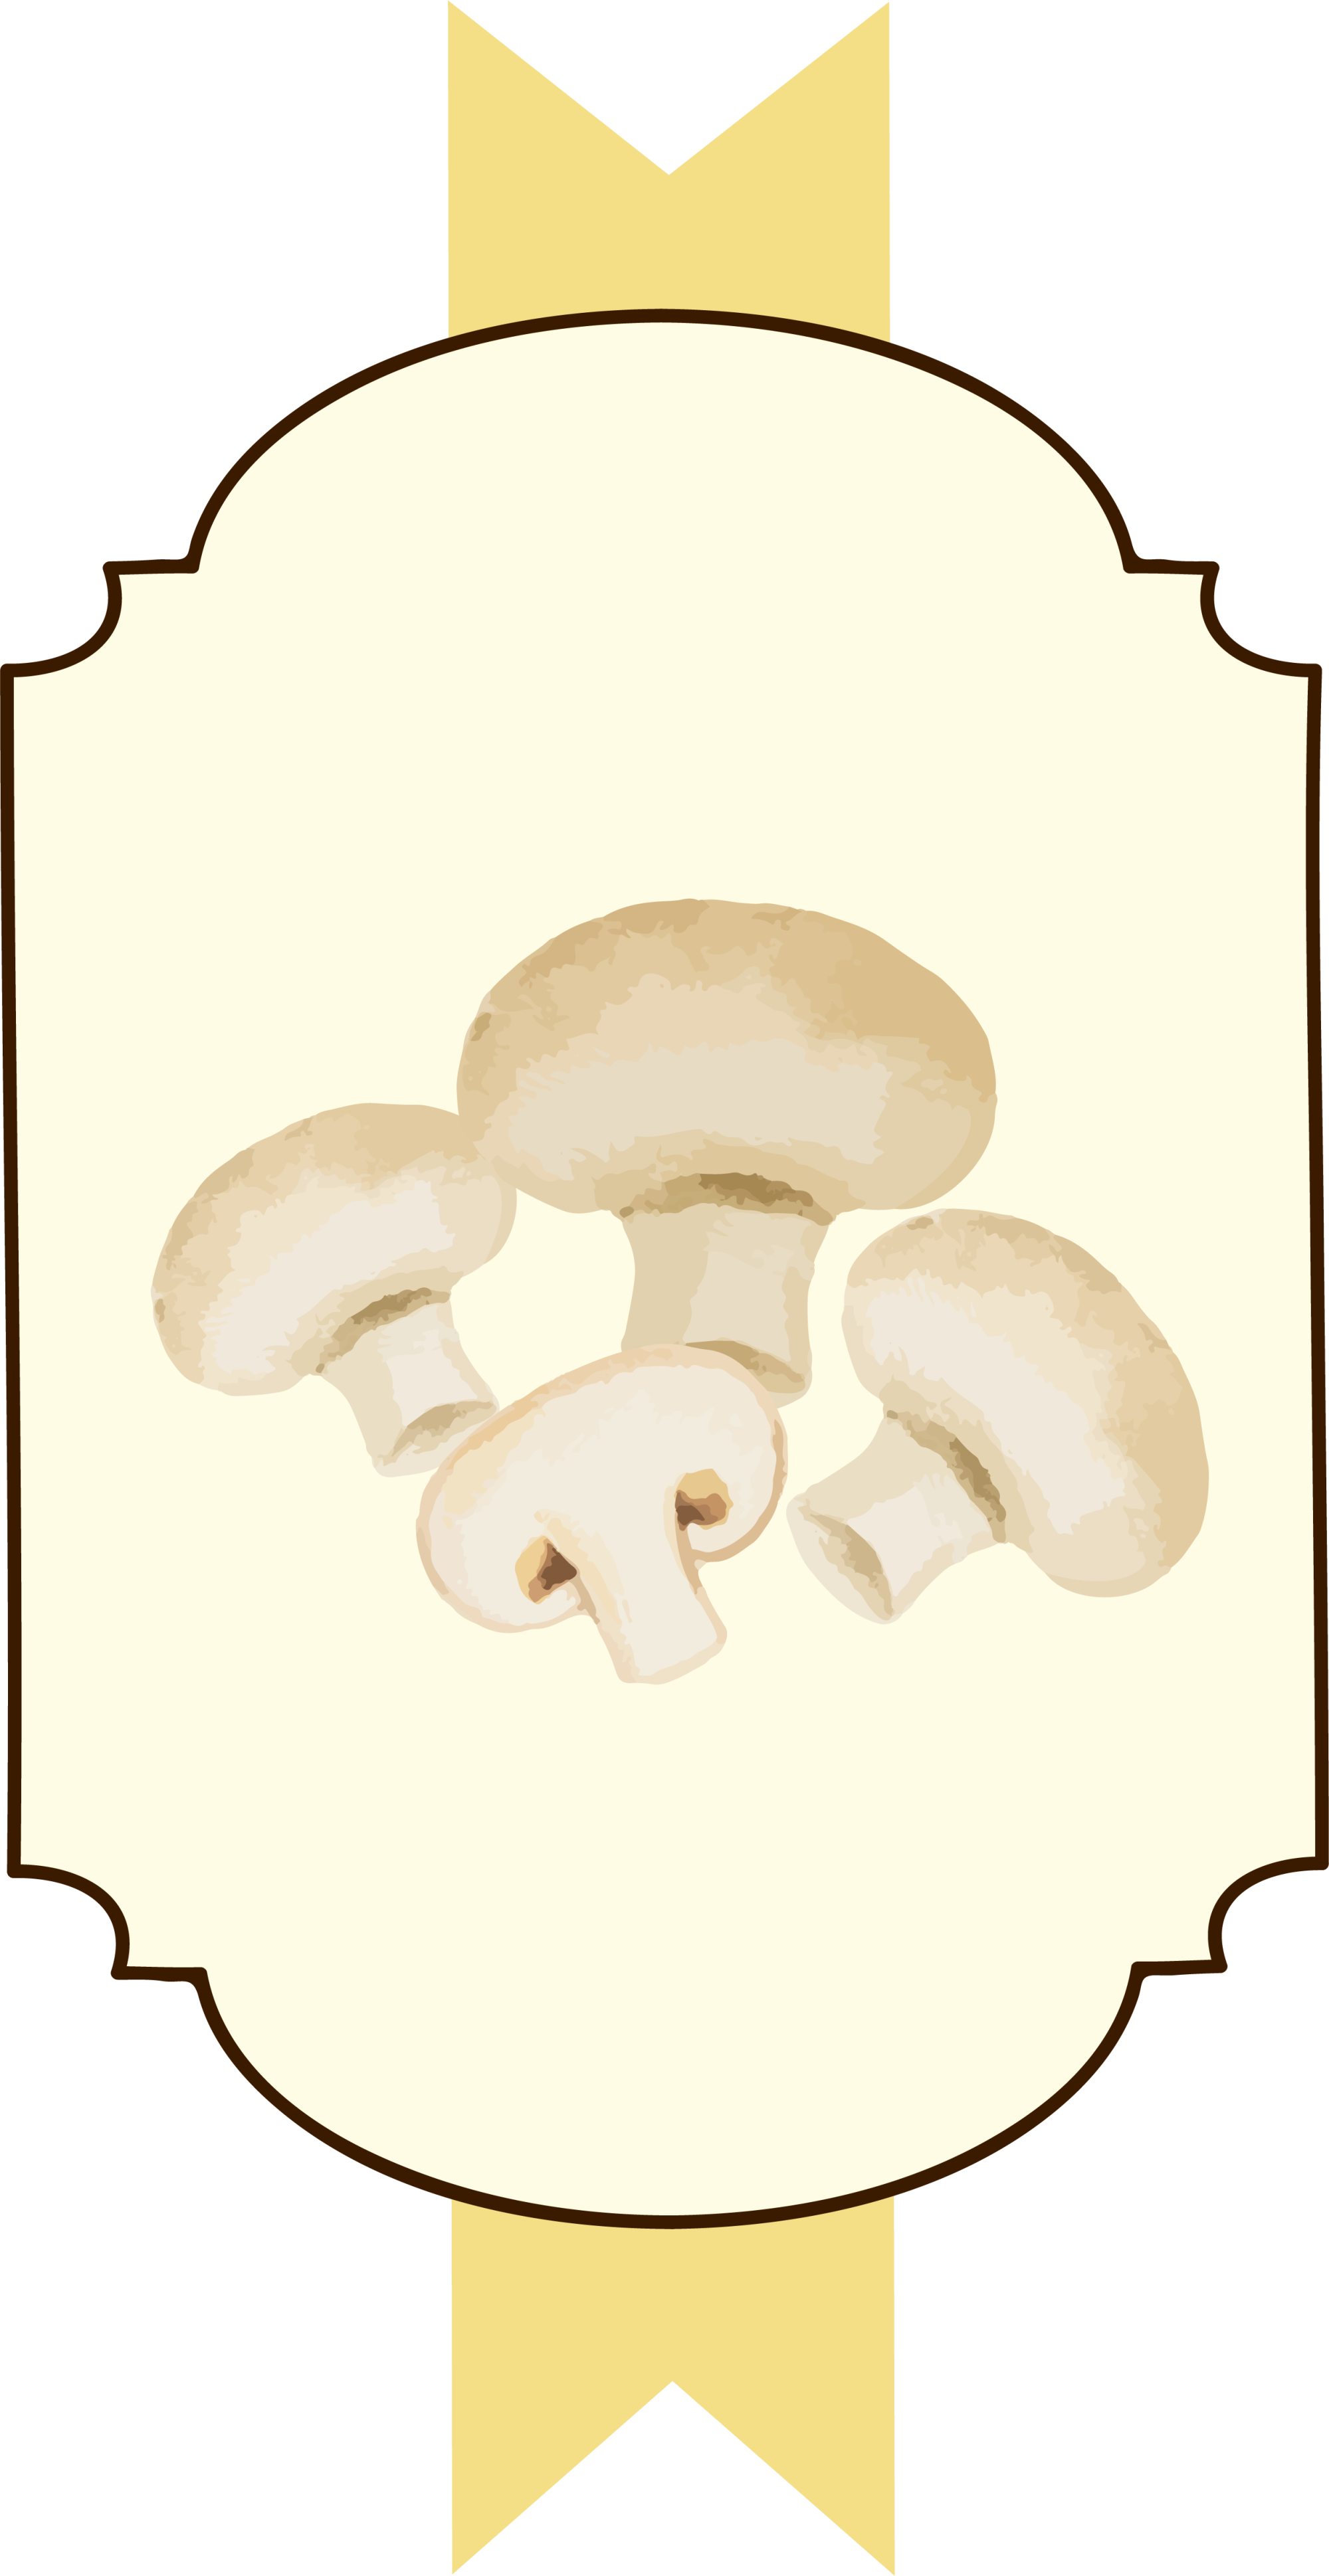 mushroom clipart yellow mushroom